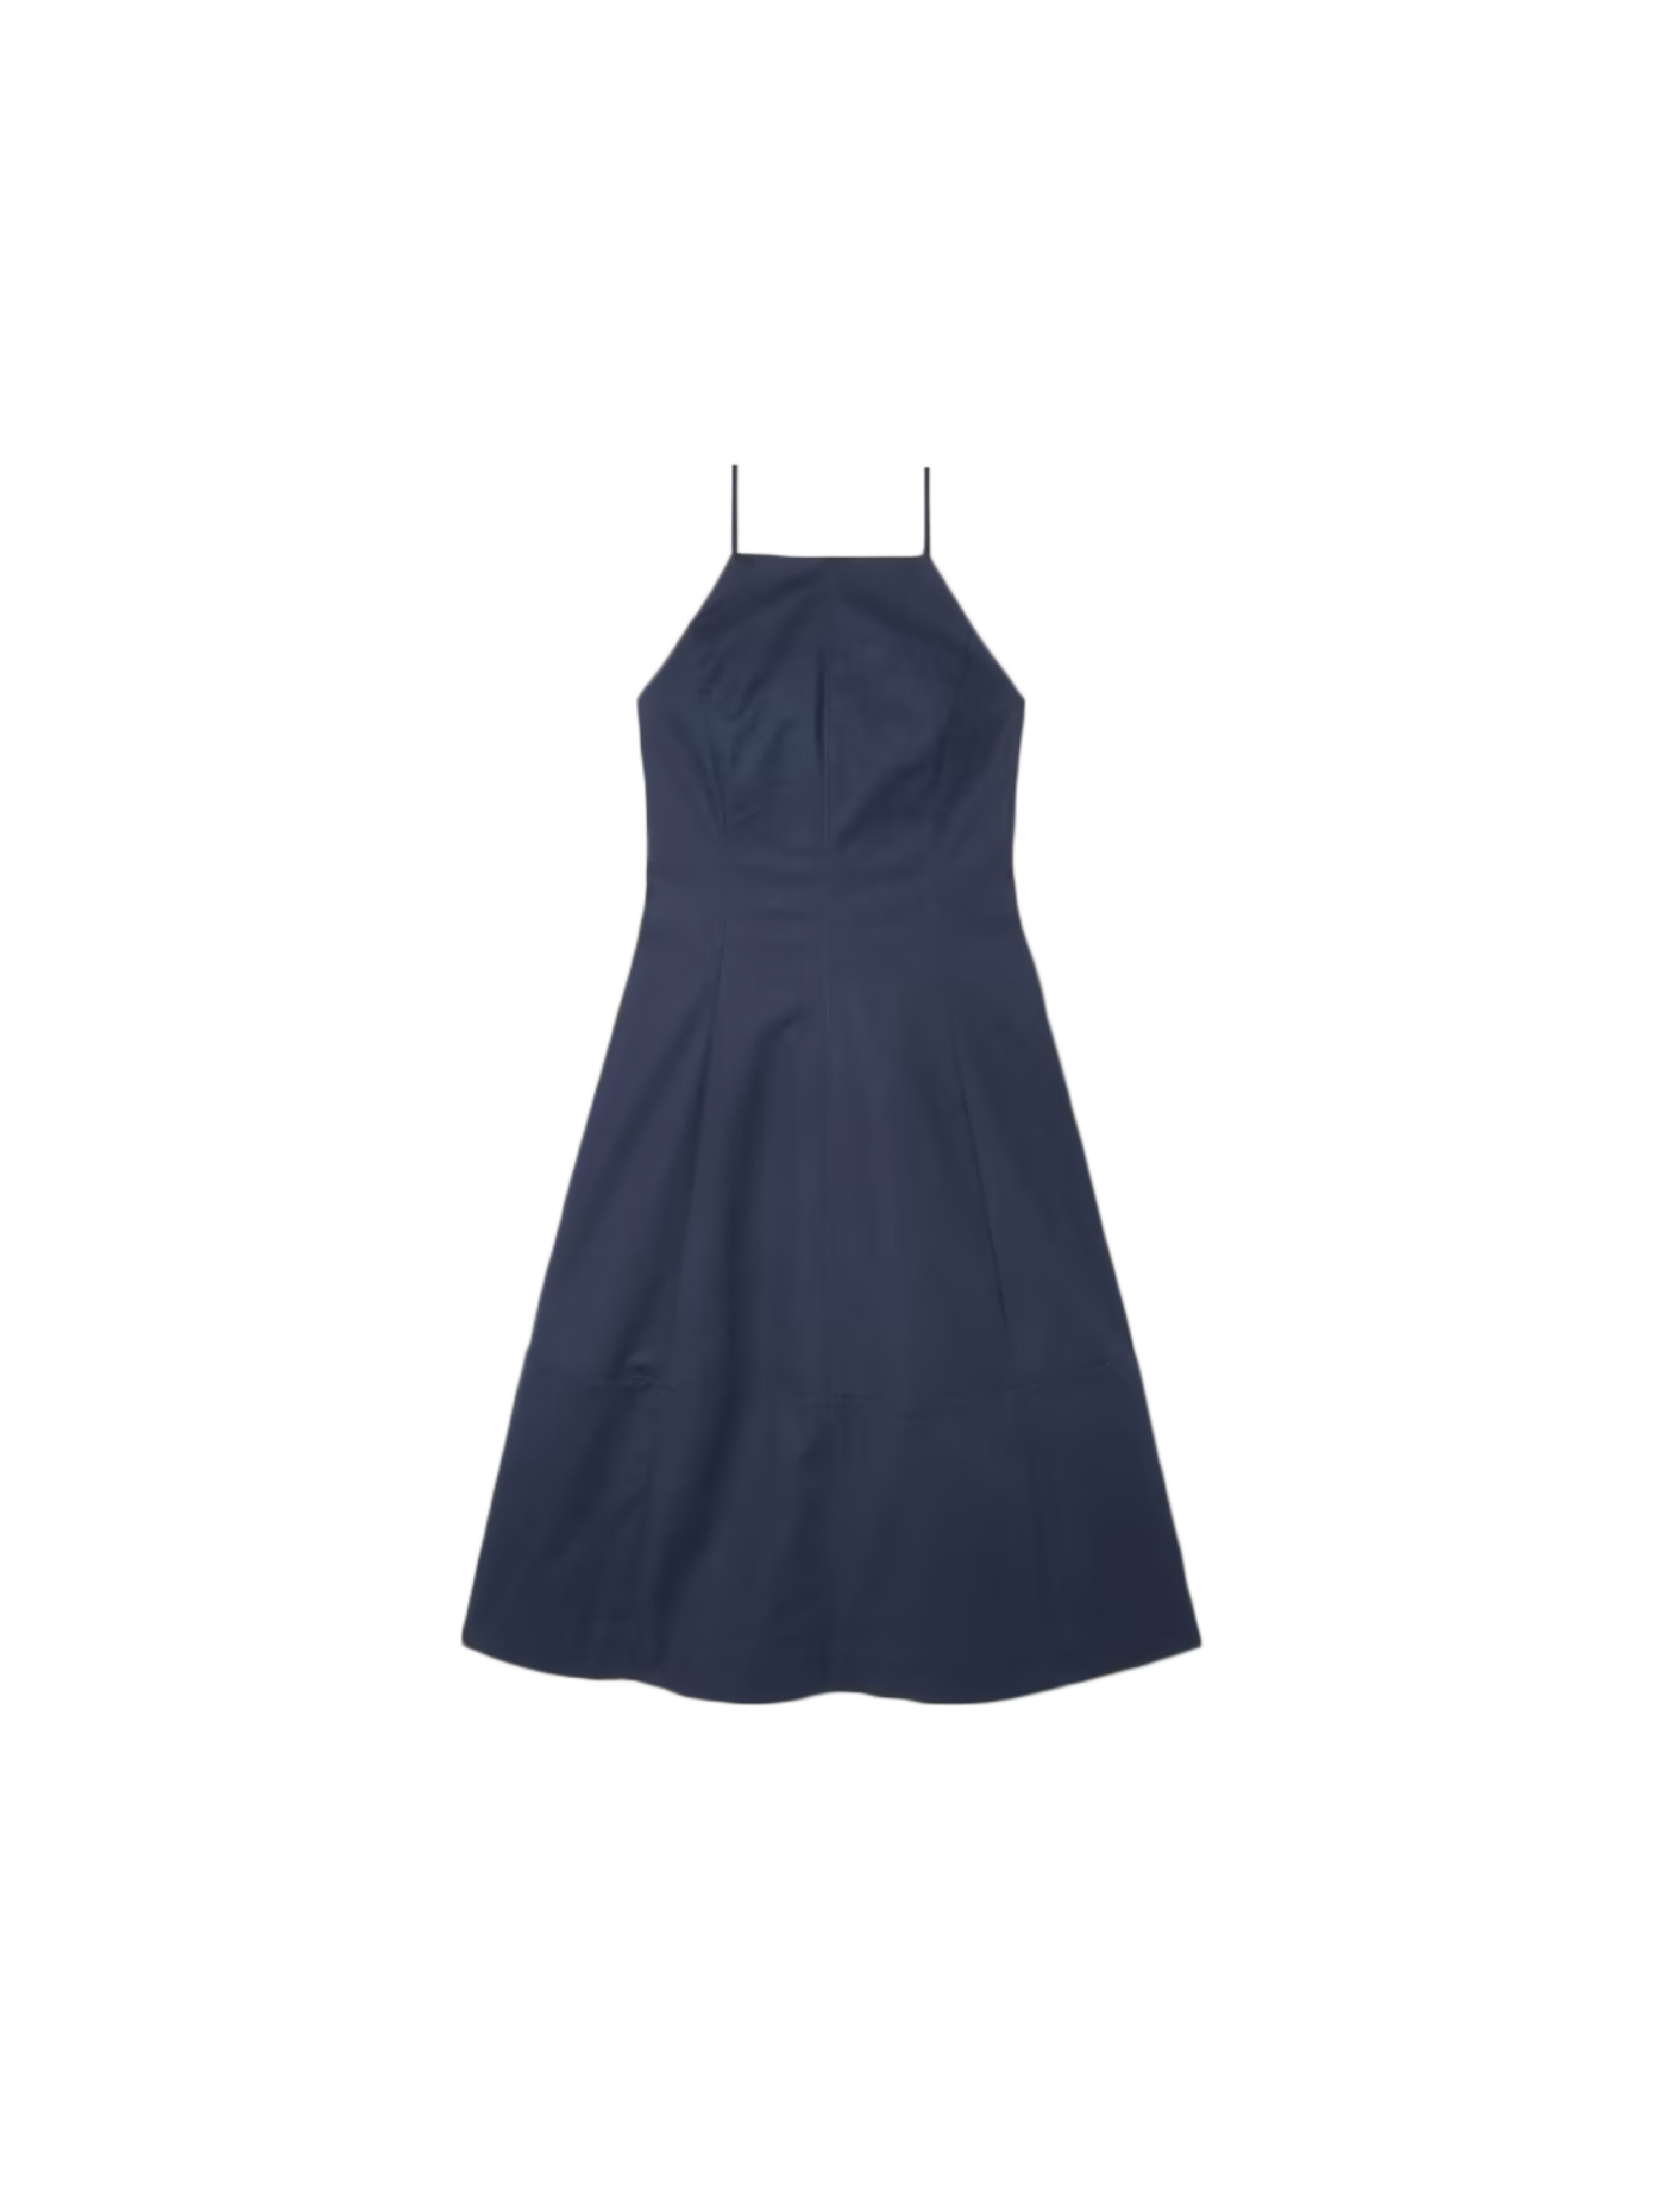 navy blue dress-01.png